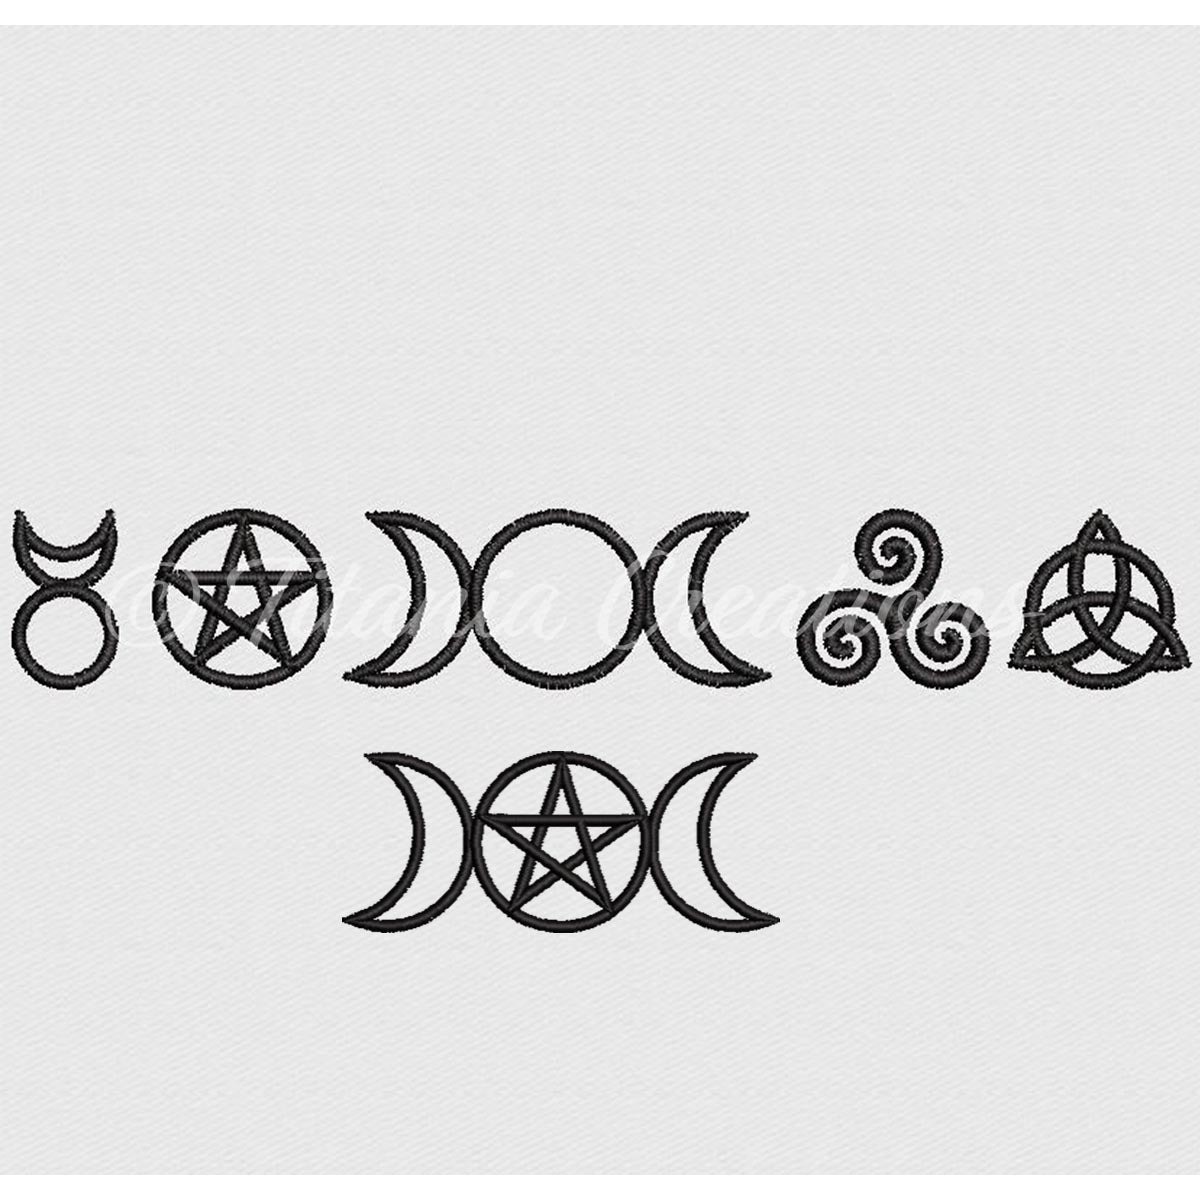 Miniature Pagan Symbols Set of Six